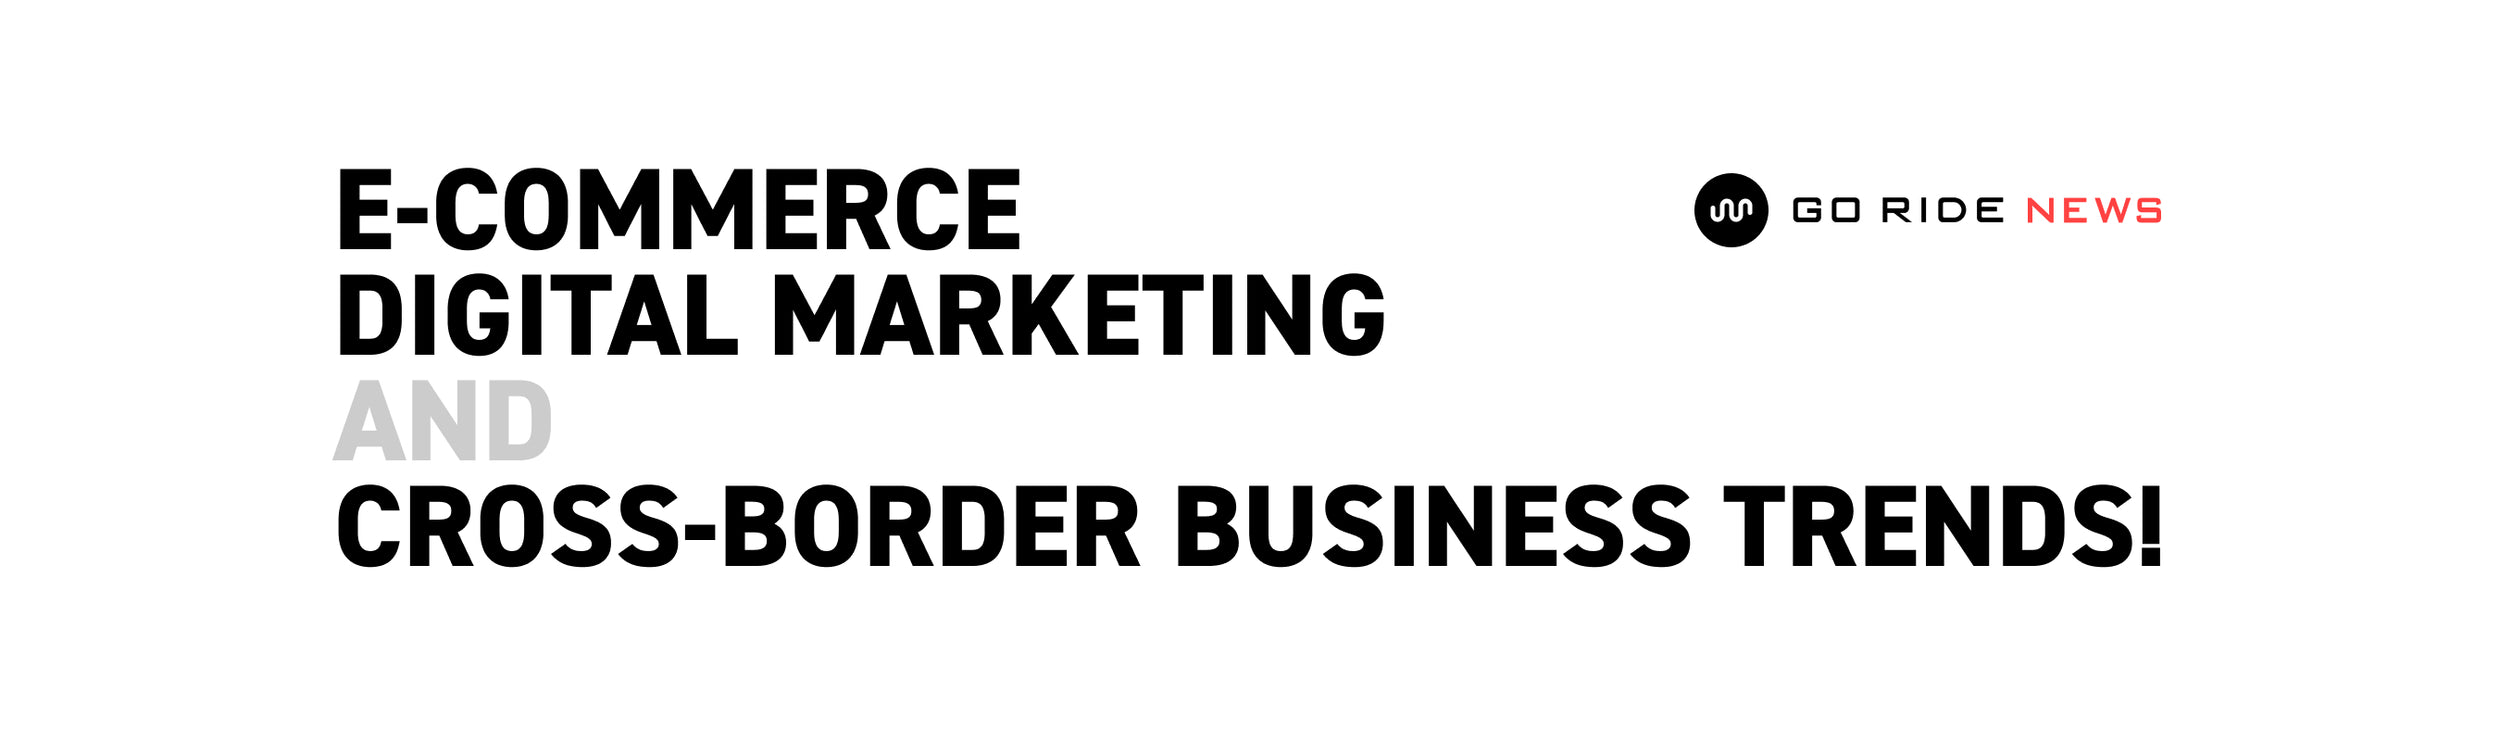 GO RIDE News E-commerce Digital Marketing and Cross-Border Business trends!